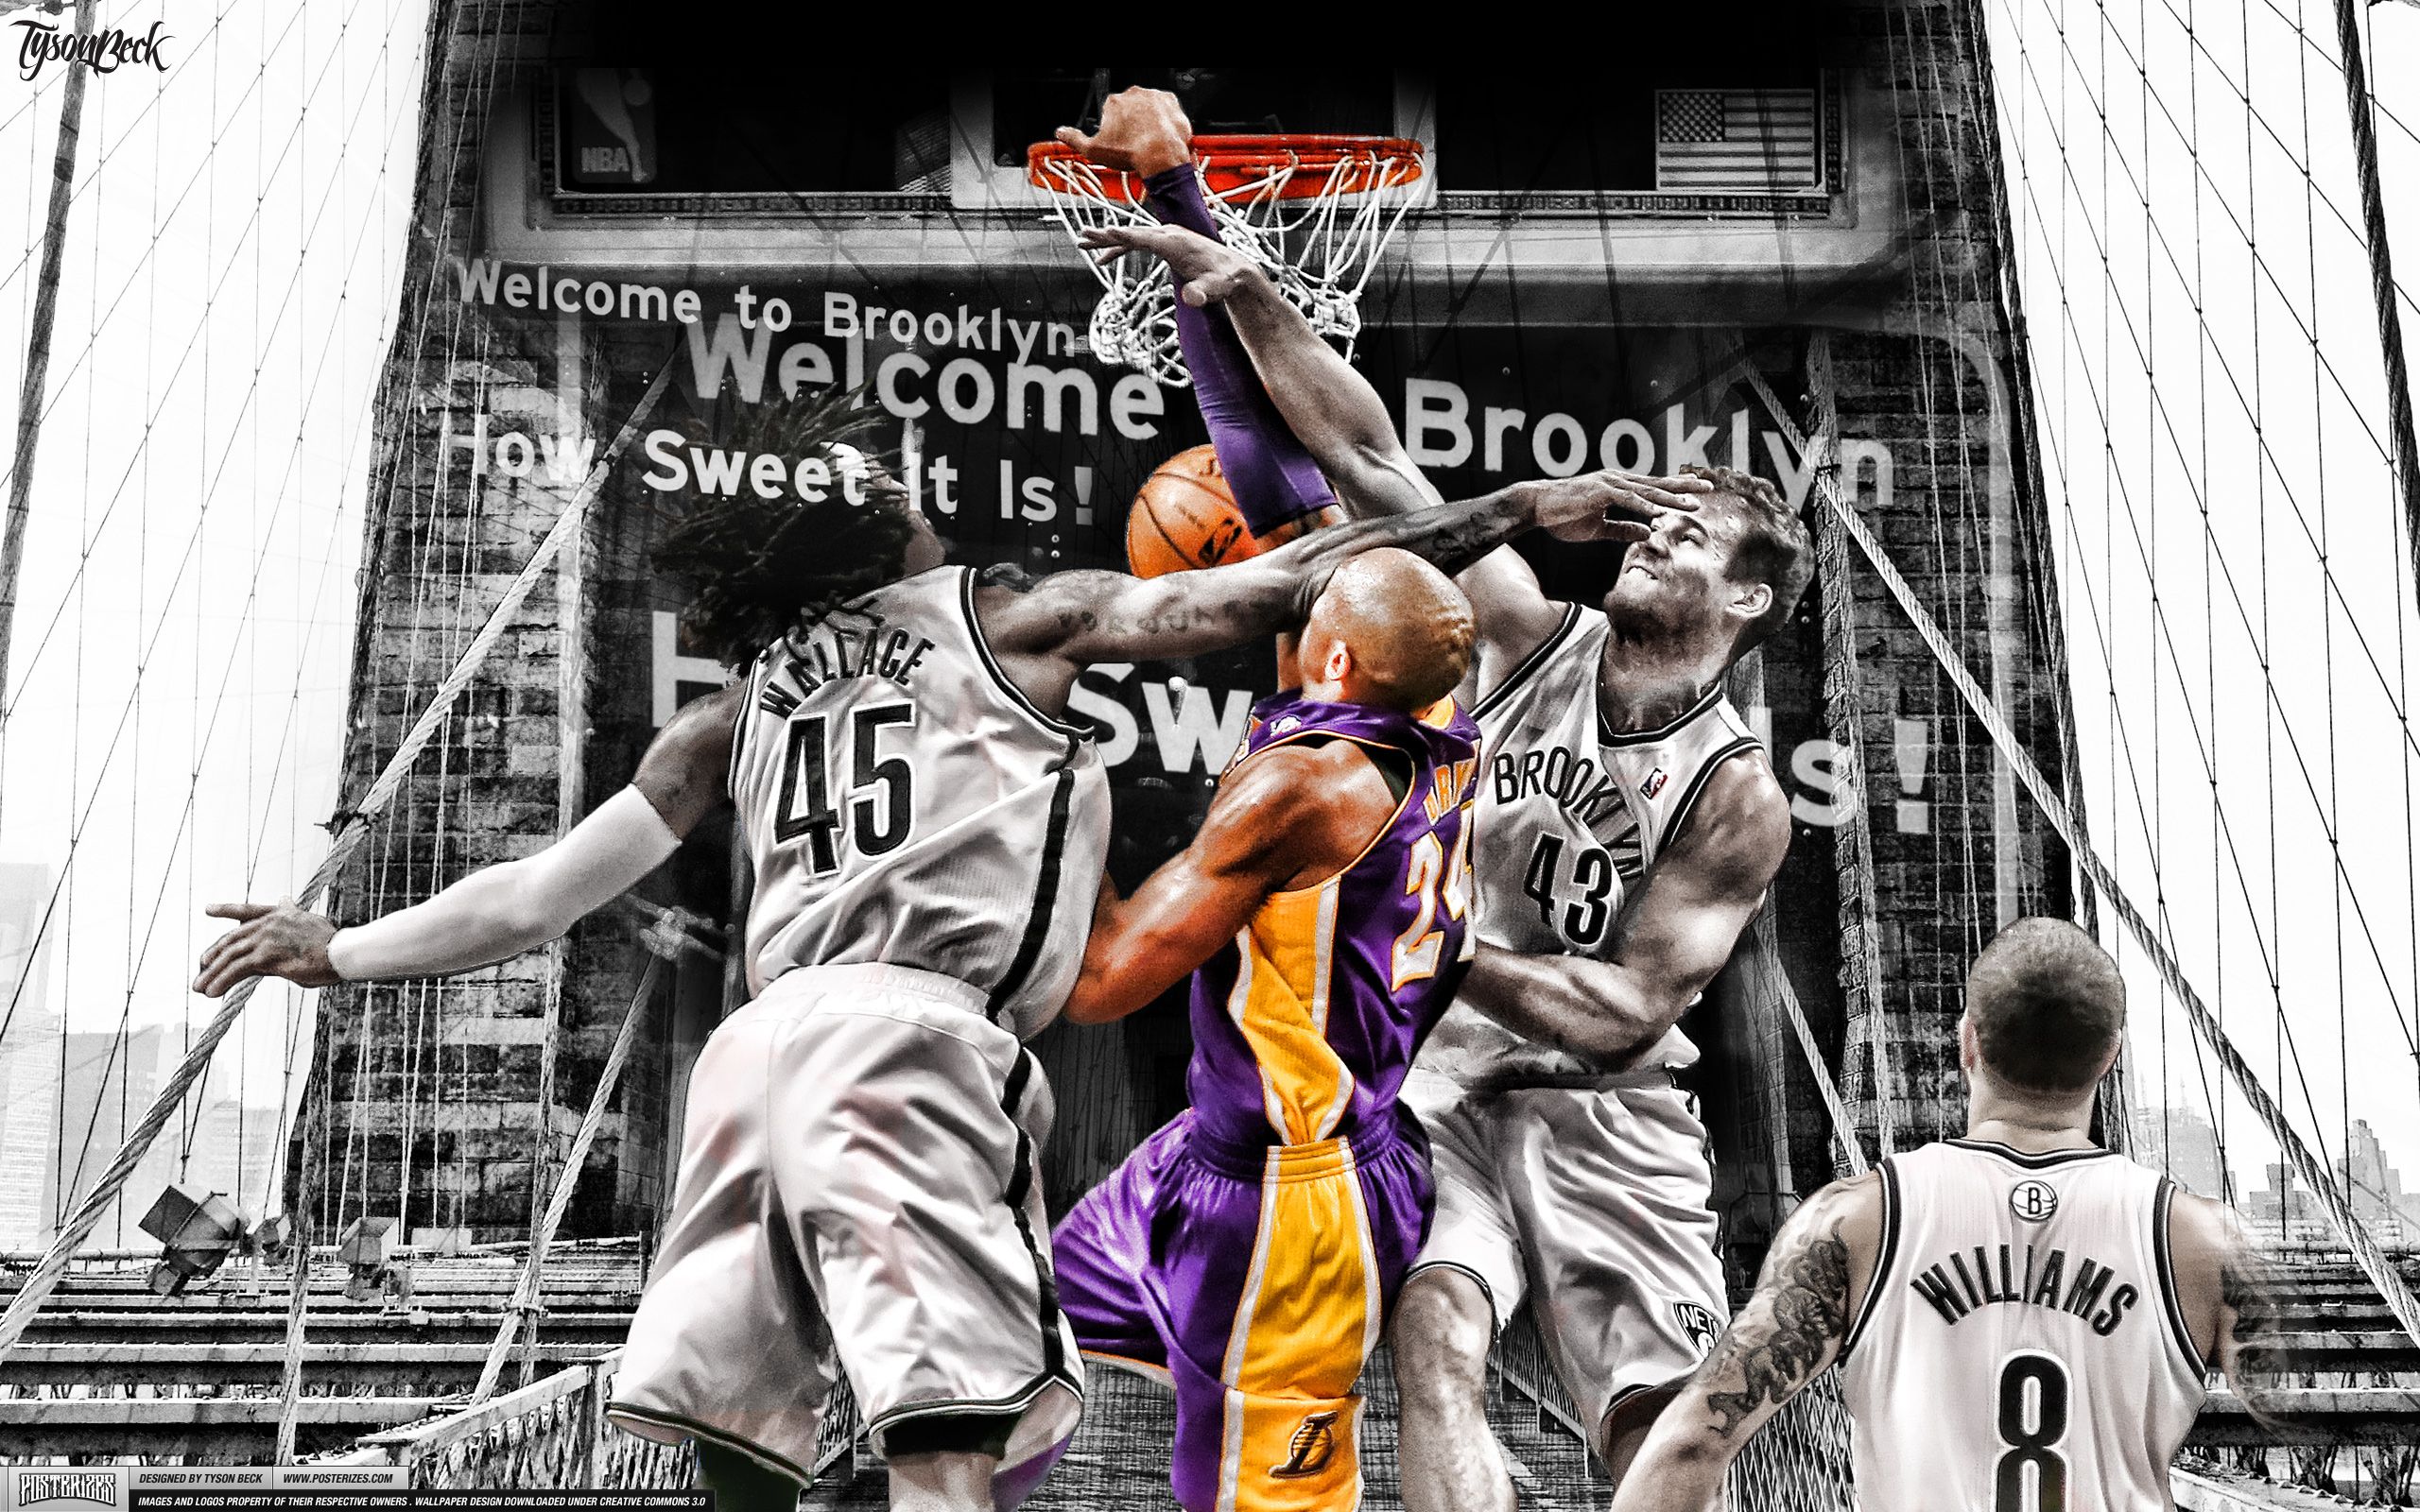 Kobe Bryant Dunks On Brooklyn Wallpaper - Brooklyn Signs Company - HD Wallpaper 